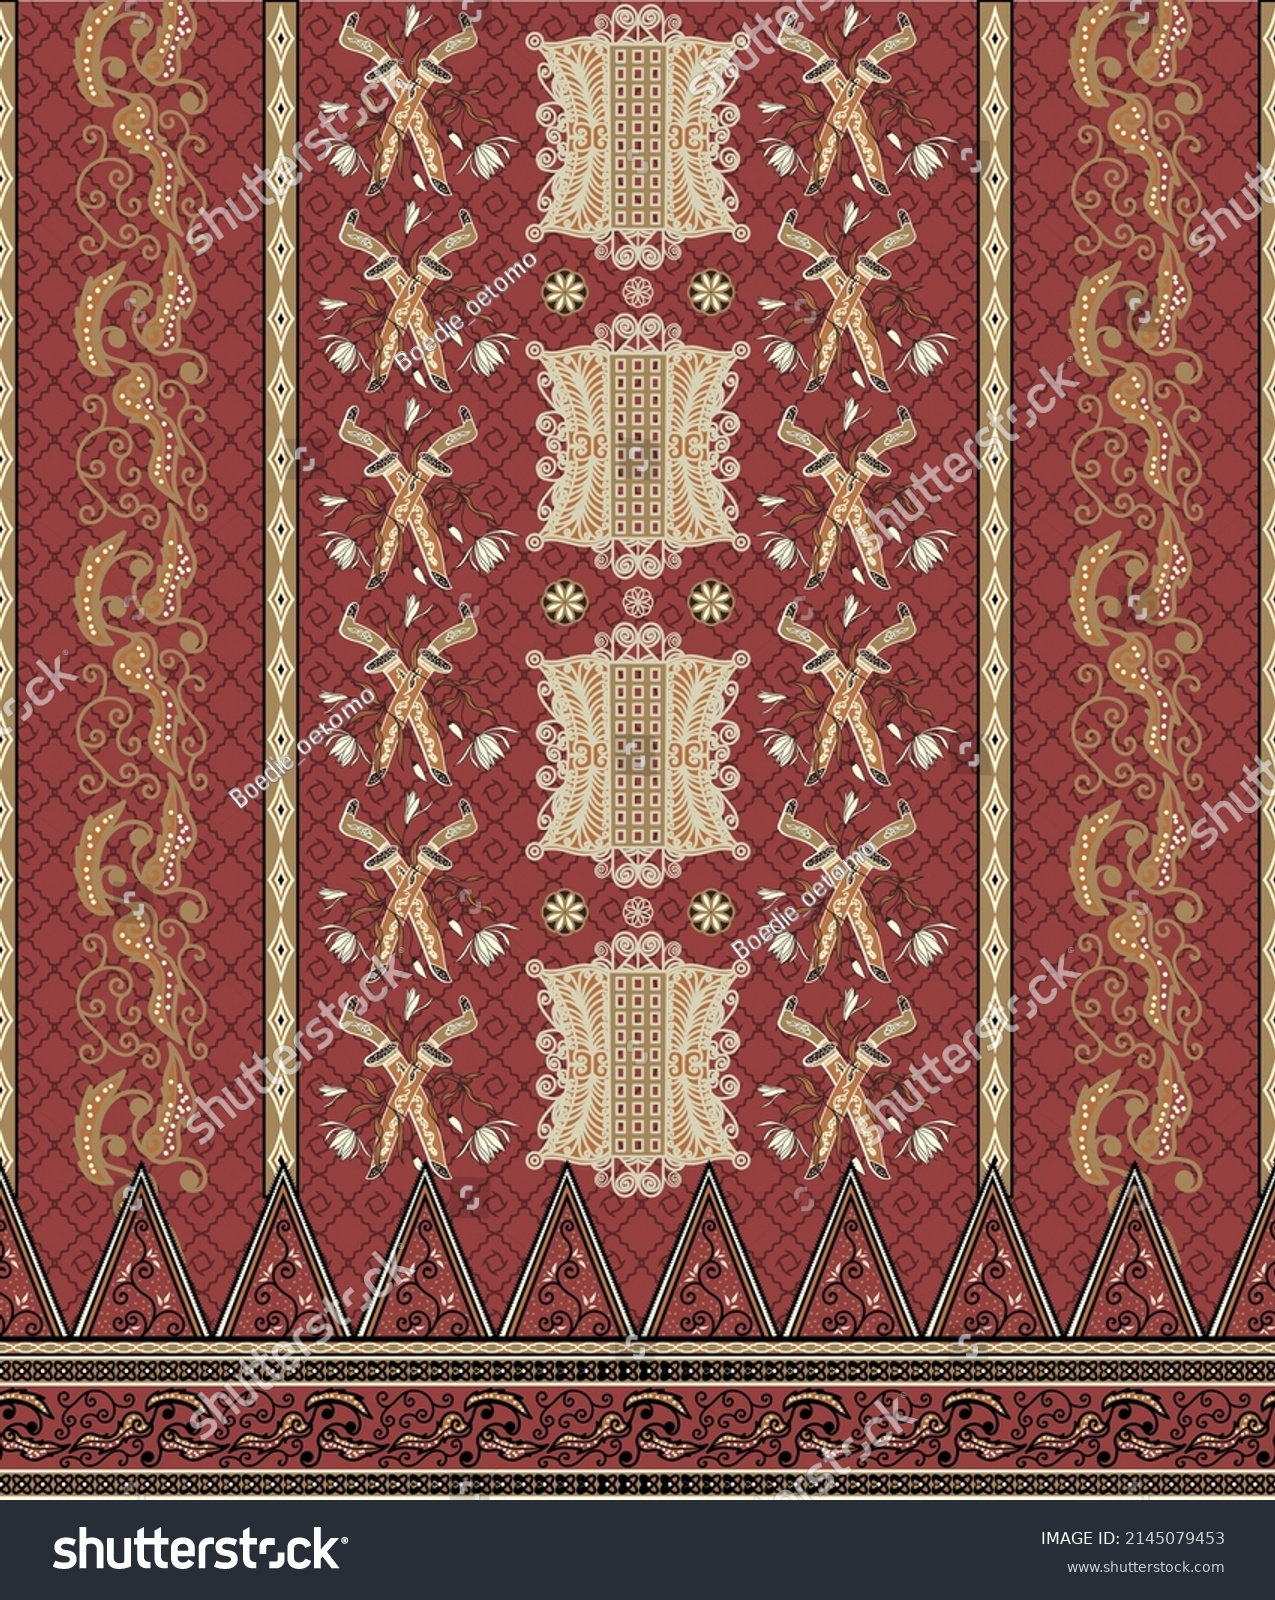 SVG of Indonesian traditional batik, Aceh batik, North Sumatra. svg